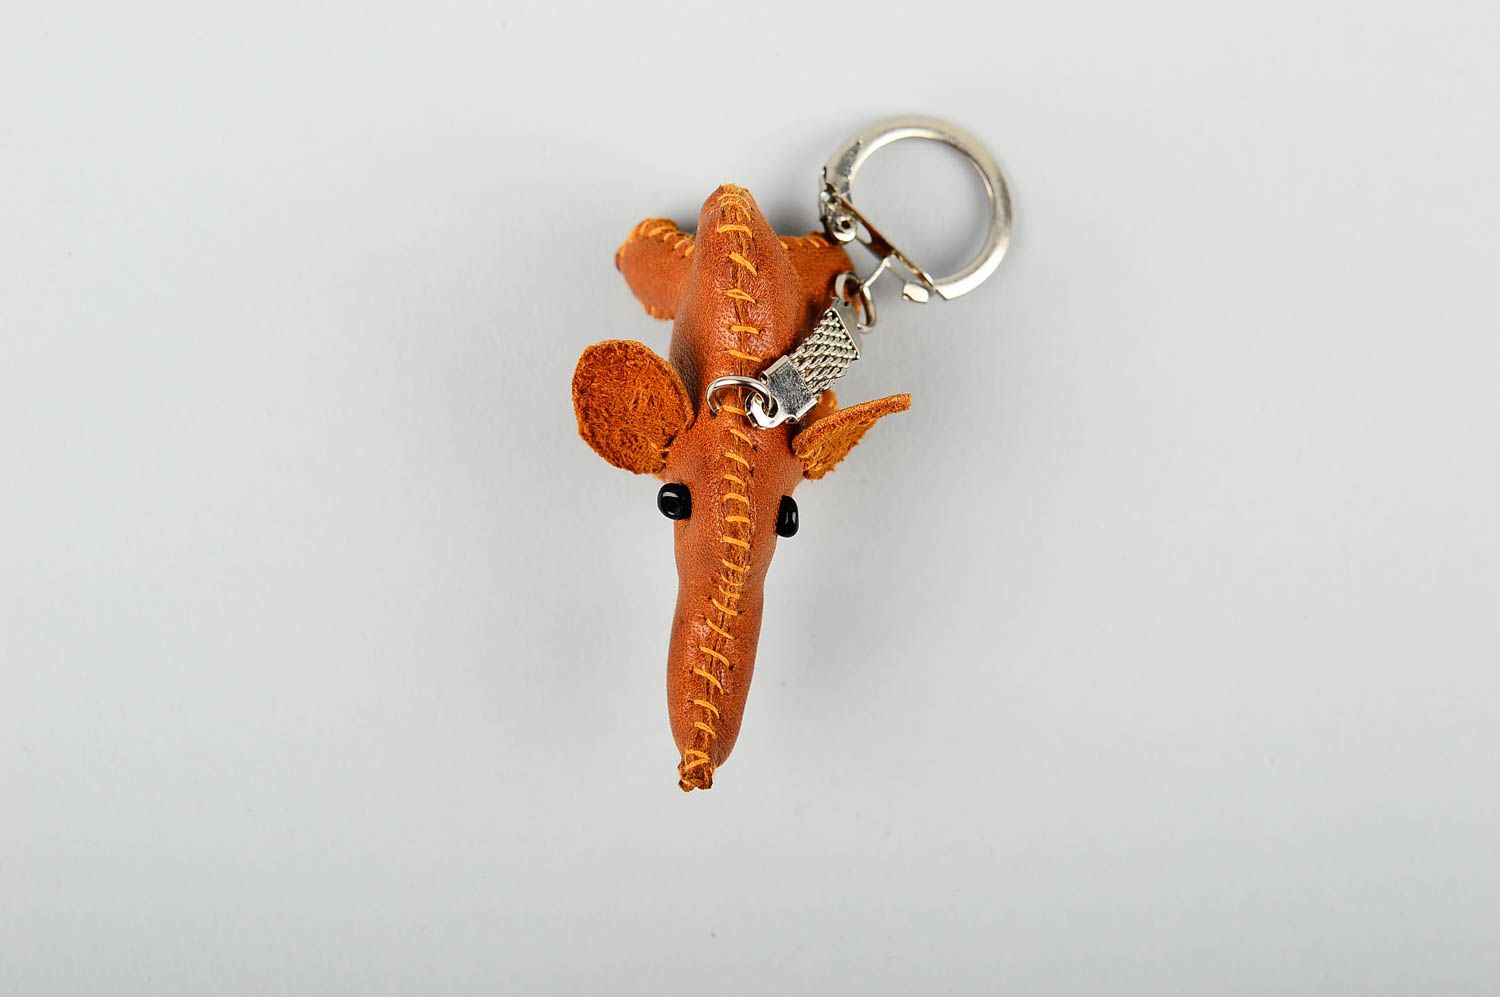 Unusual handmade leather keychain cool keyrings leather goods gift ideas photo 4